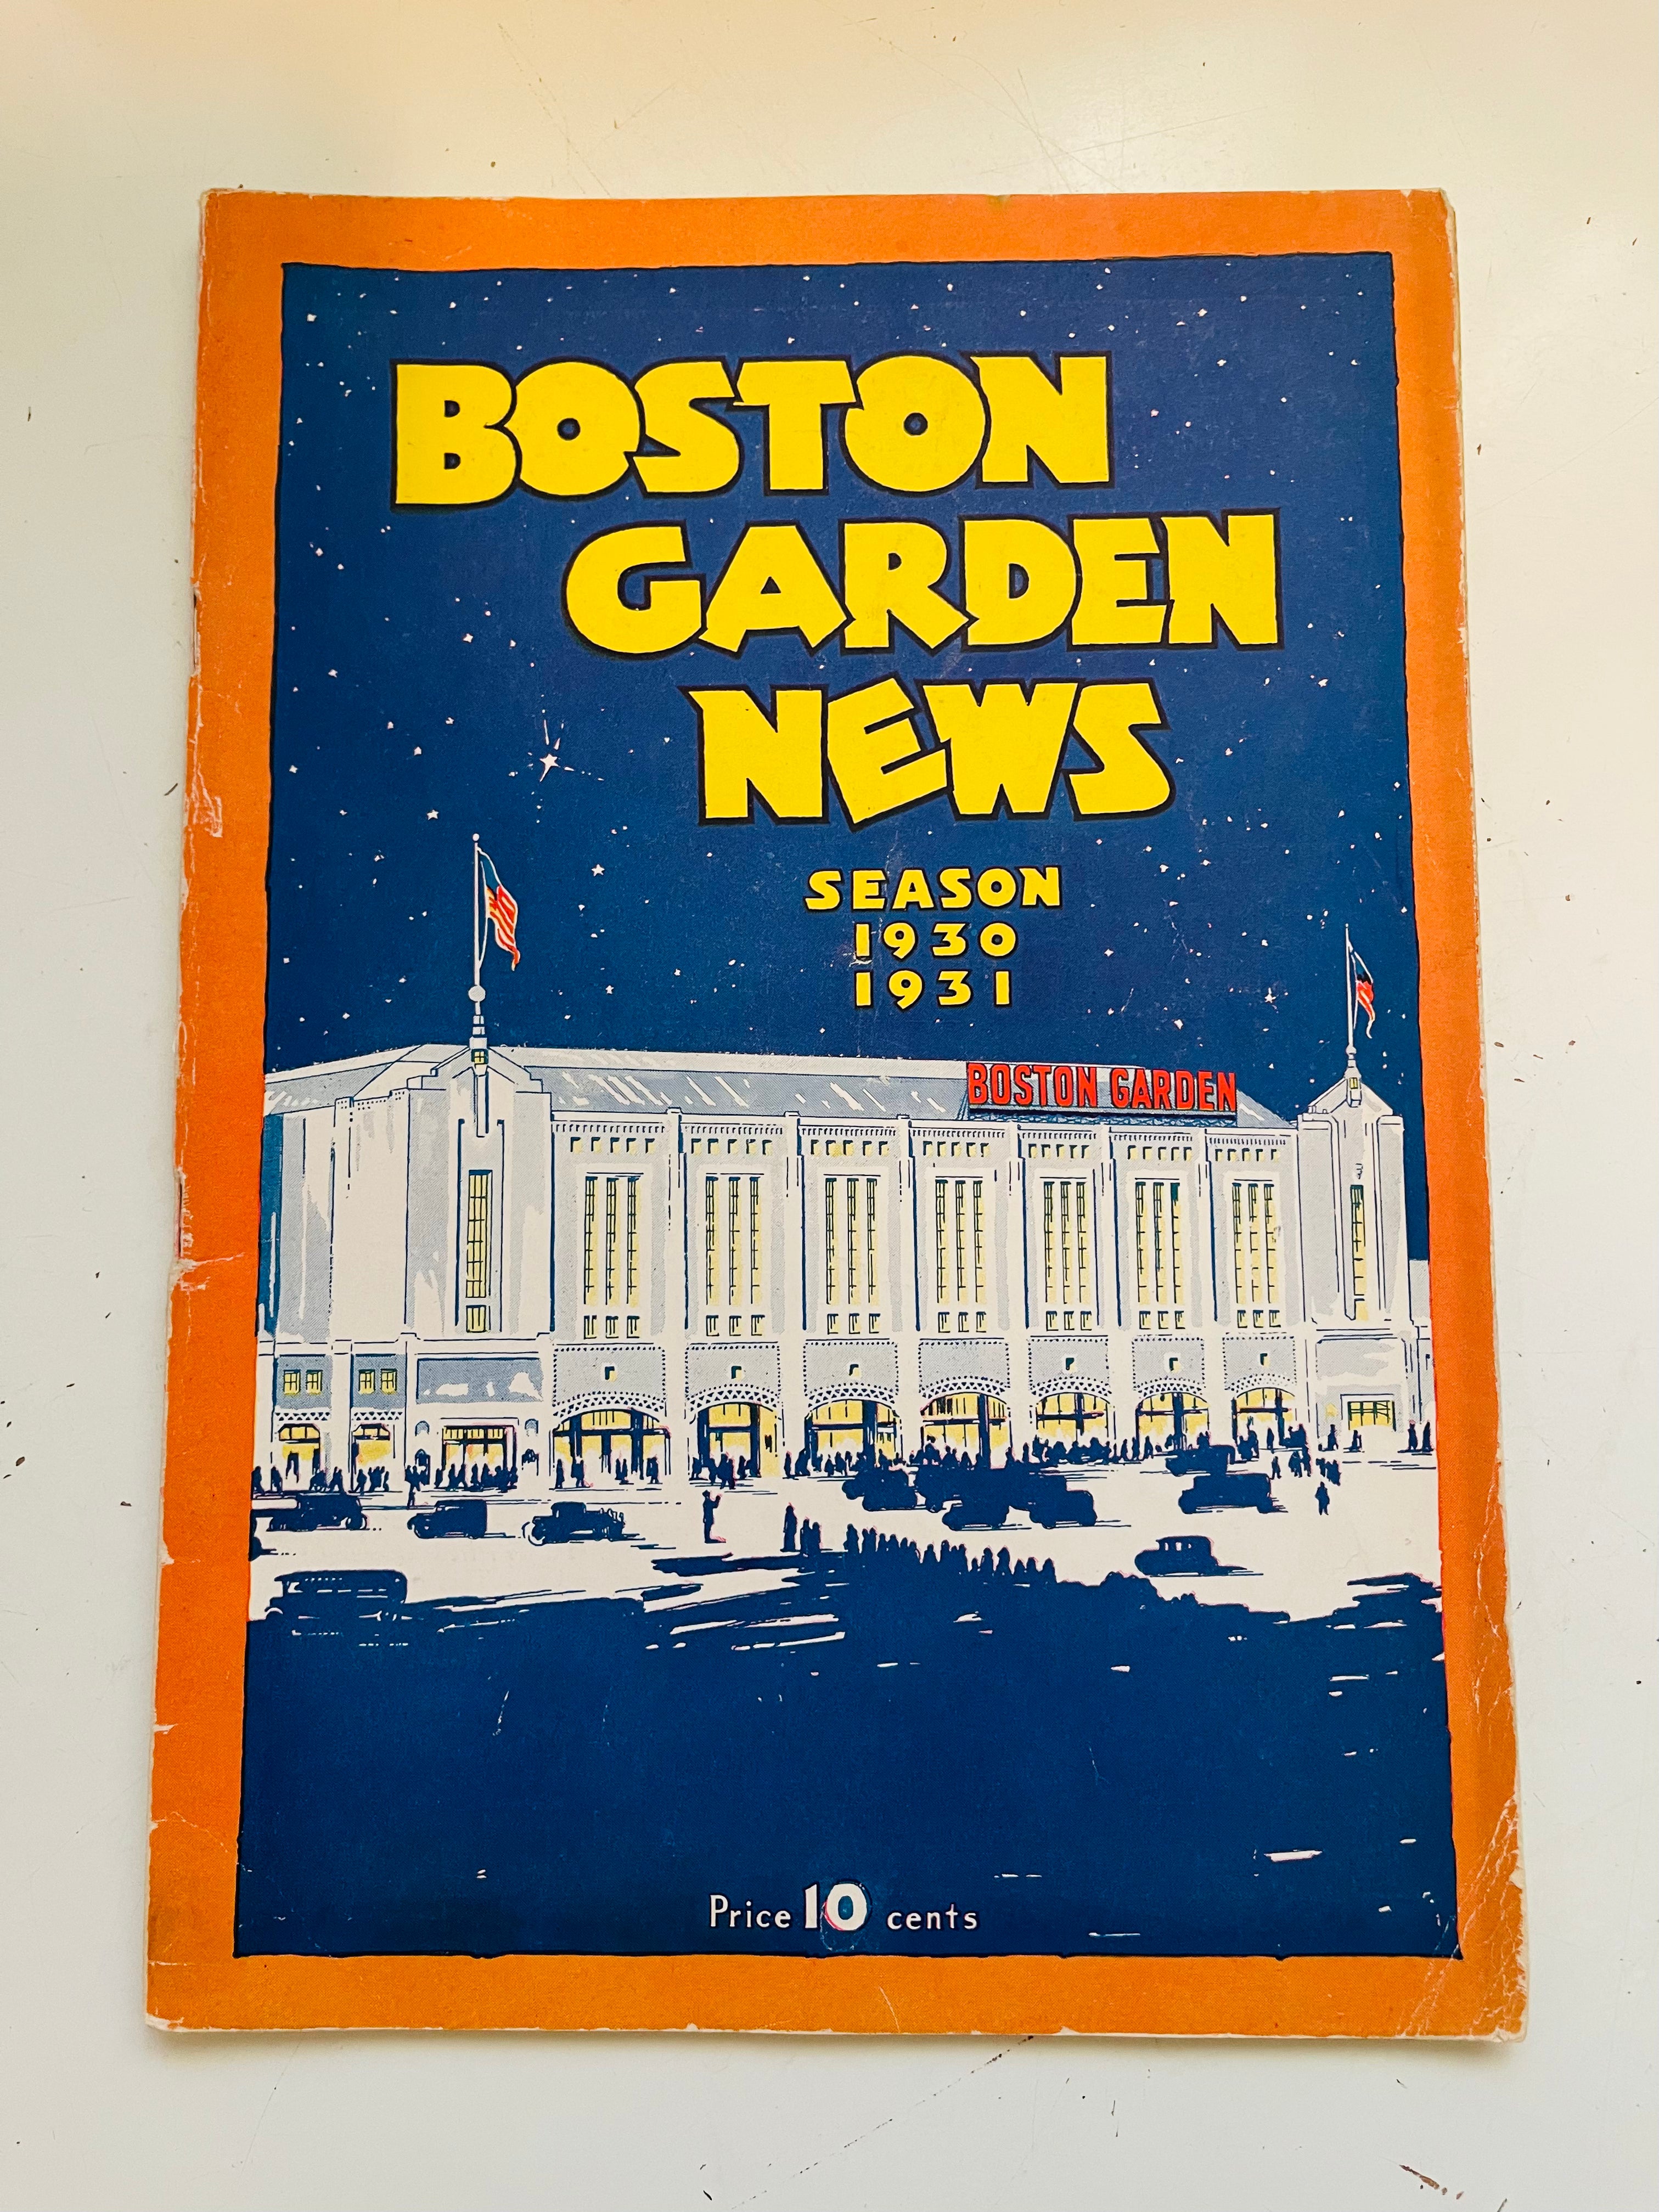 Boston Gardens rare early hockey game program Boston vs Leafs 1930-31